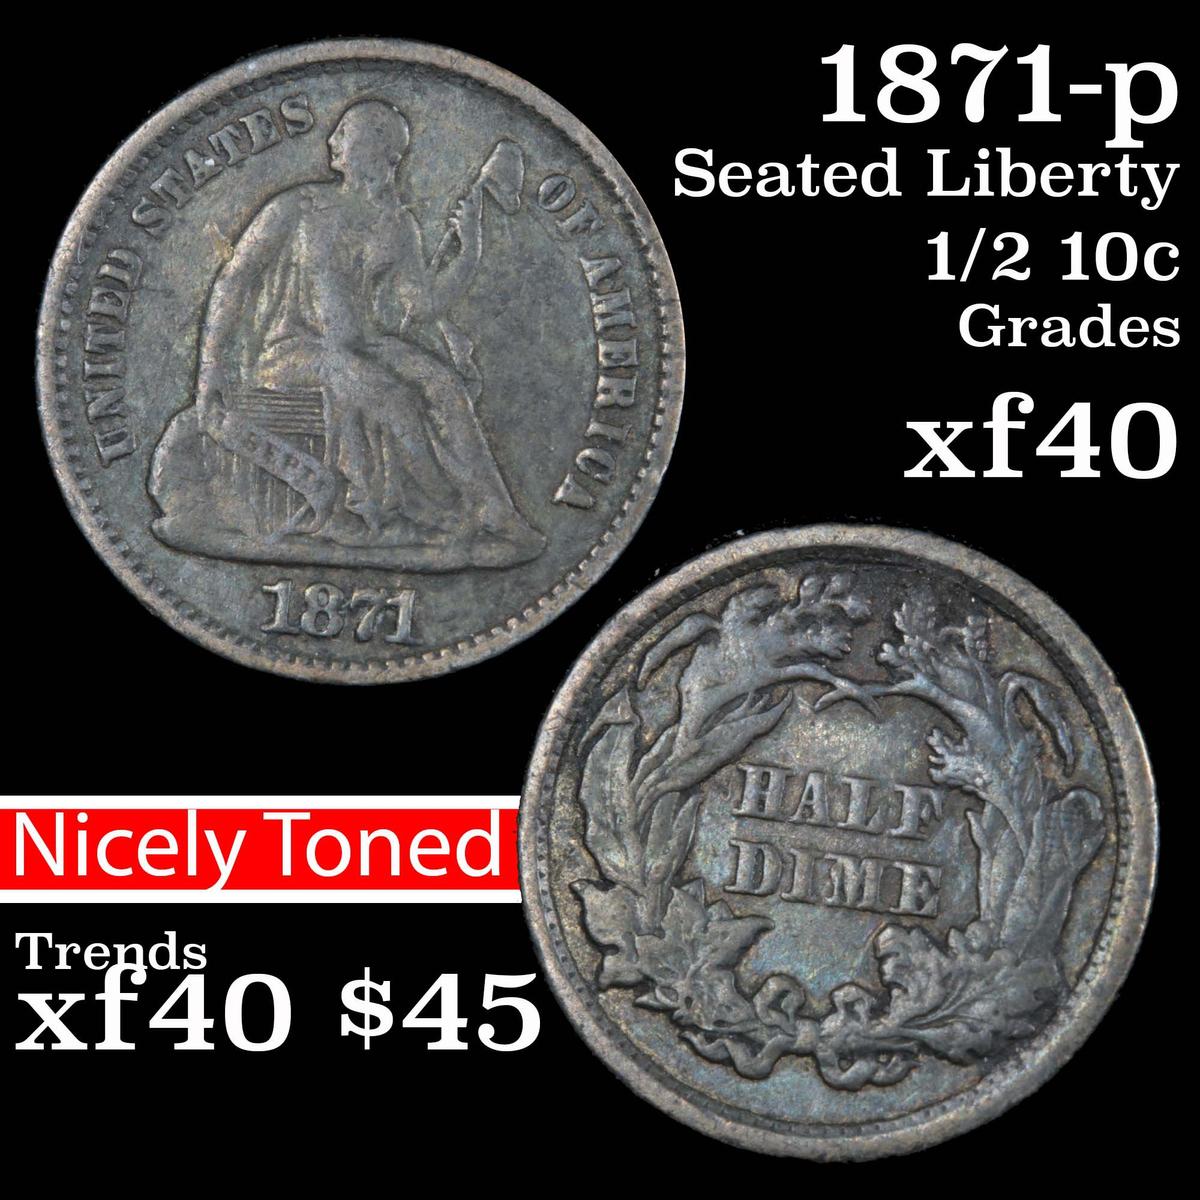 1871-p Seated Liberty Half Dime 1/2 10c Grades xf